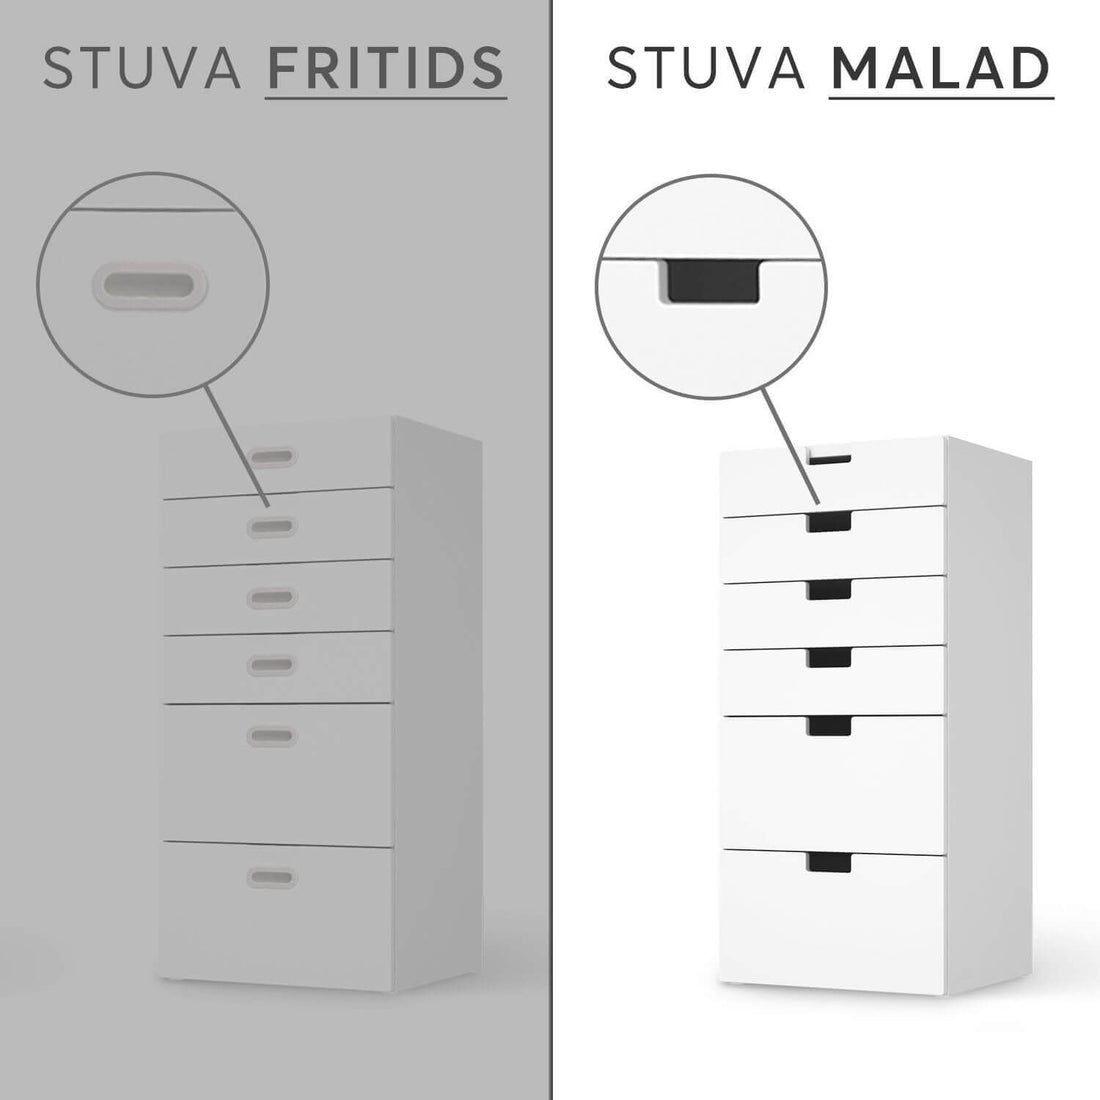 Vergleich IKEA Stuva Malad / Fritids - Eulenparty